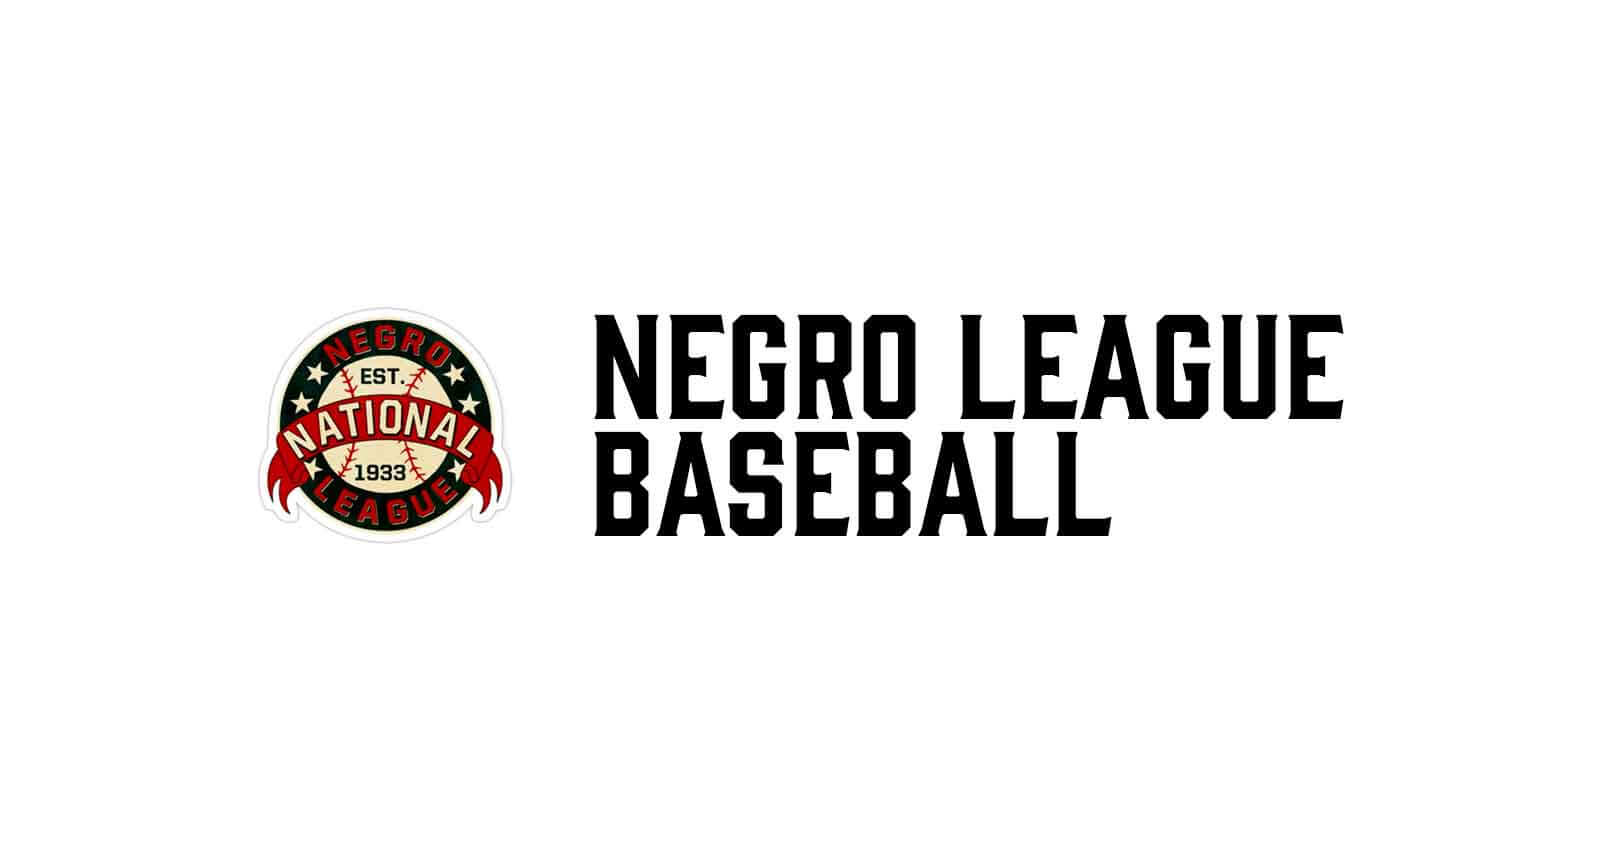 NLBM Negro League Heritage Wool Cap St. Louis Stars